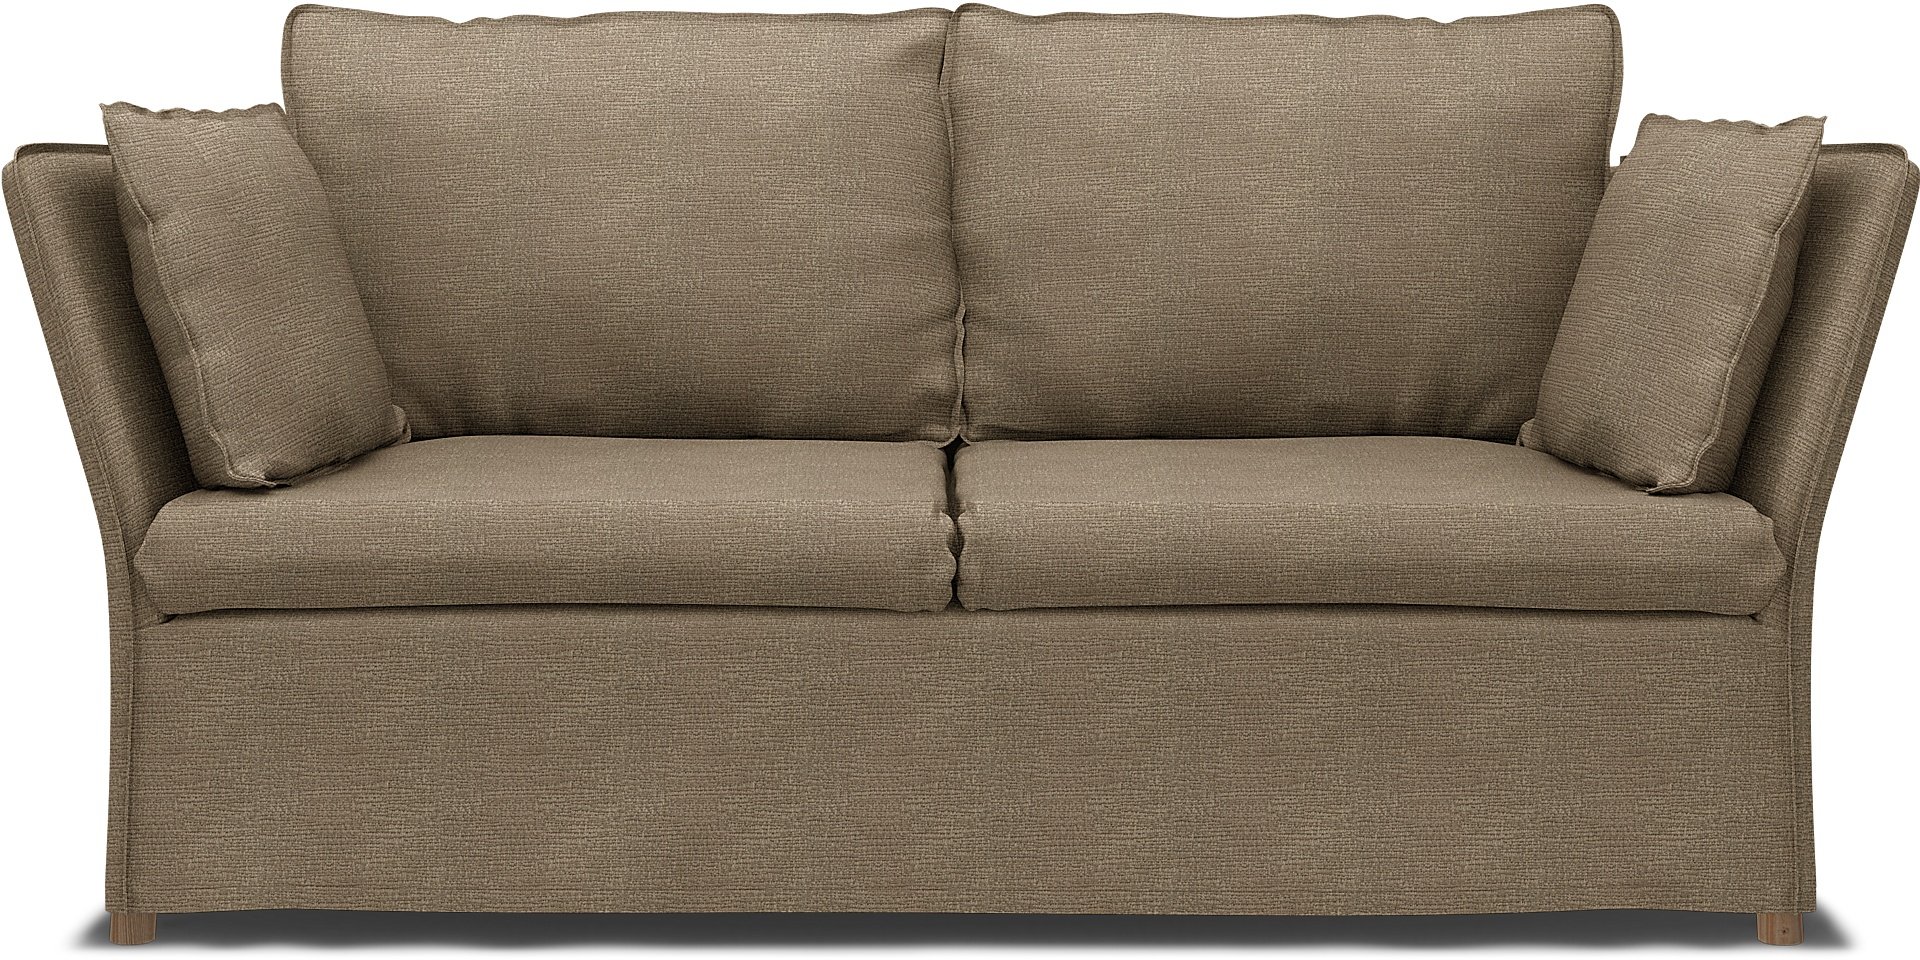 IKEA - Backsalen 2 seater sofa, Camel, Boucle & Texture - Bemz